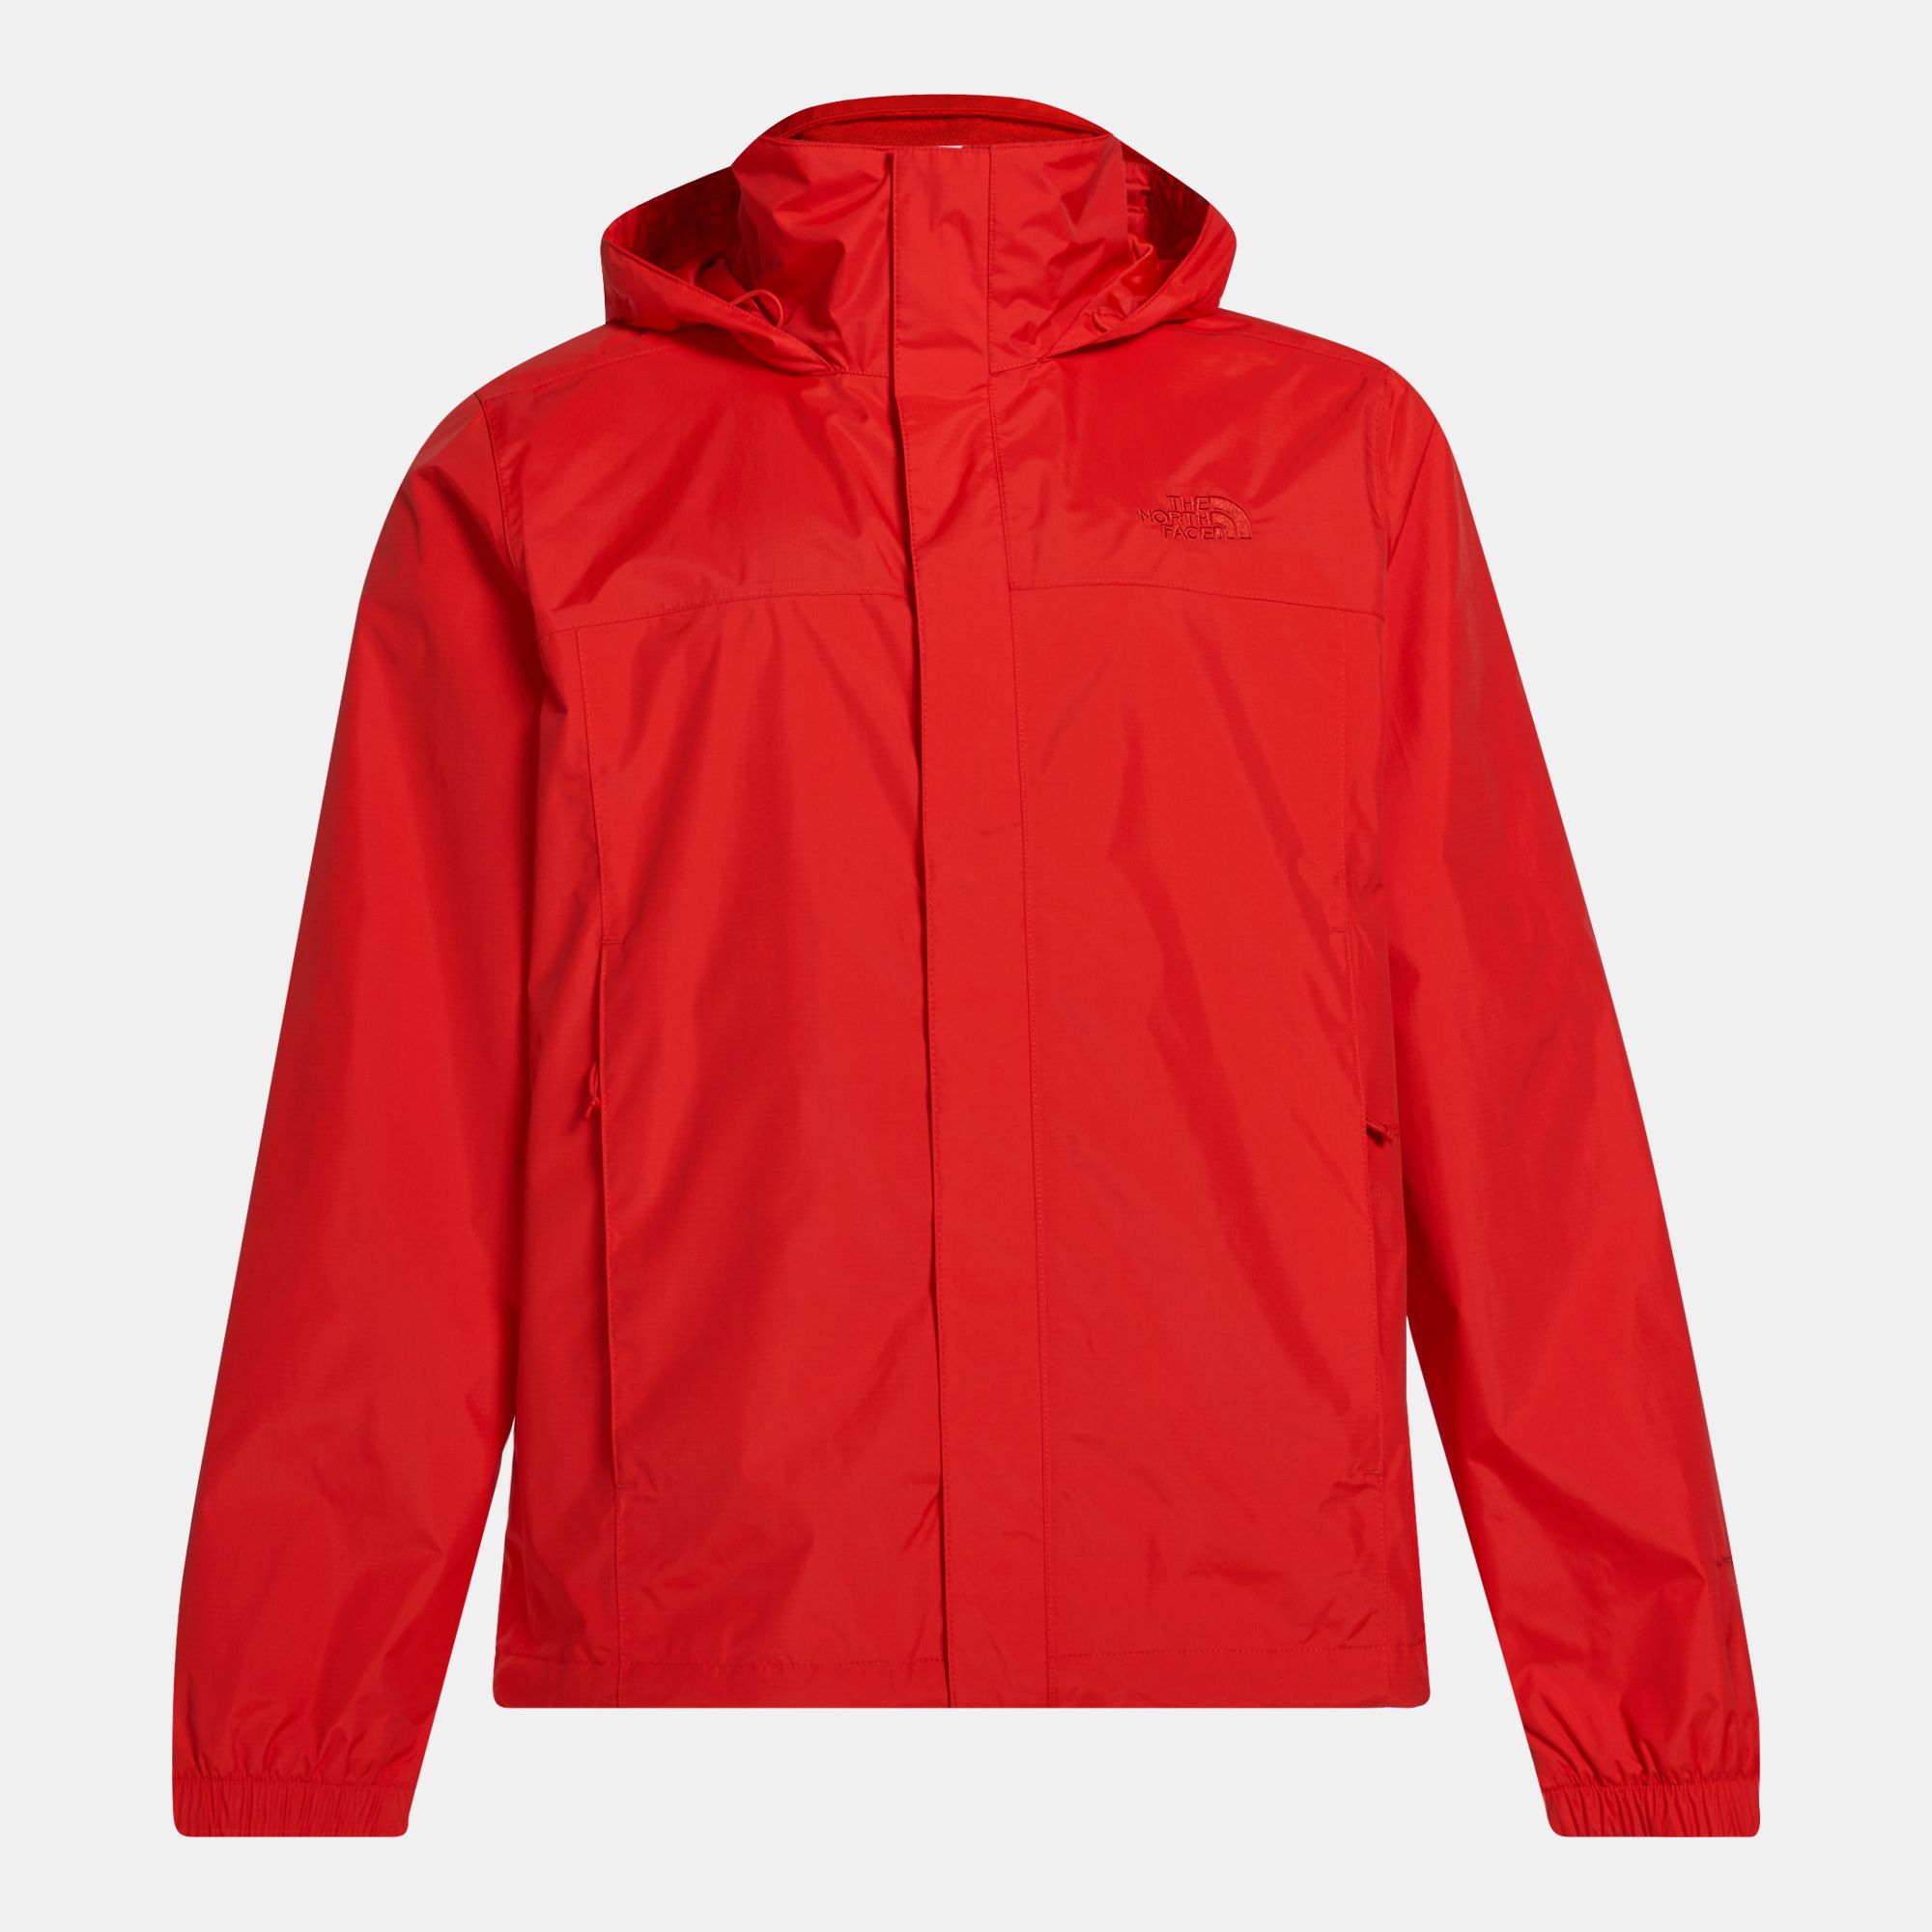 The North Face Men's Resolve 2 Rain Jacket | Jackets | Clothing | Men's ...